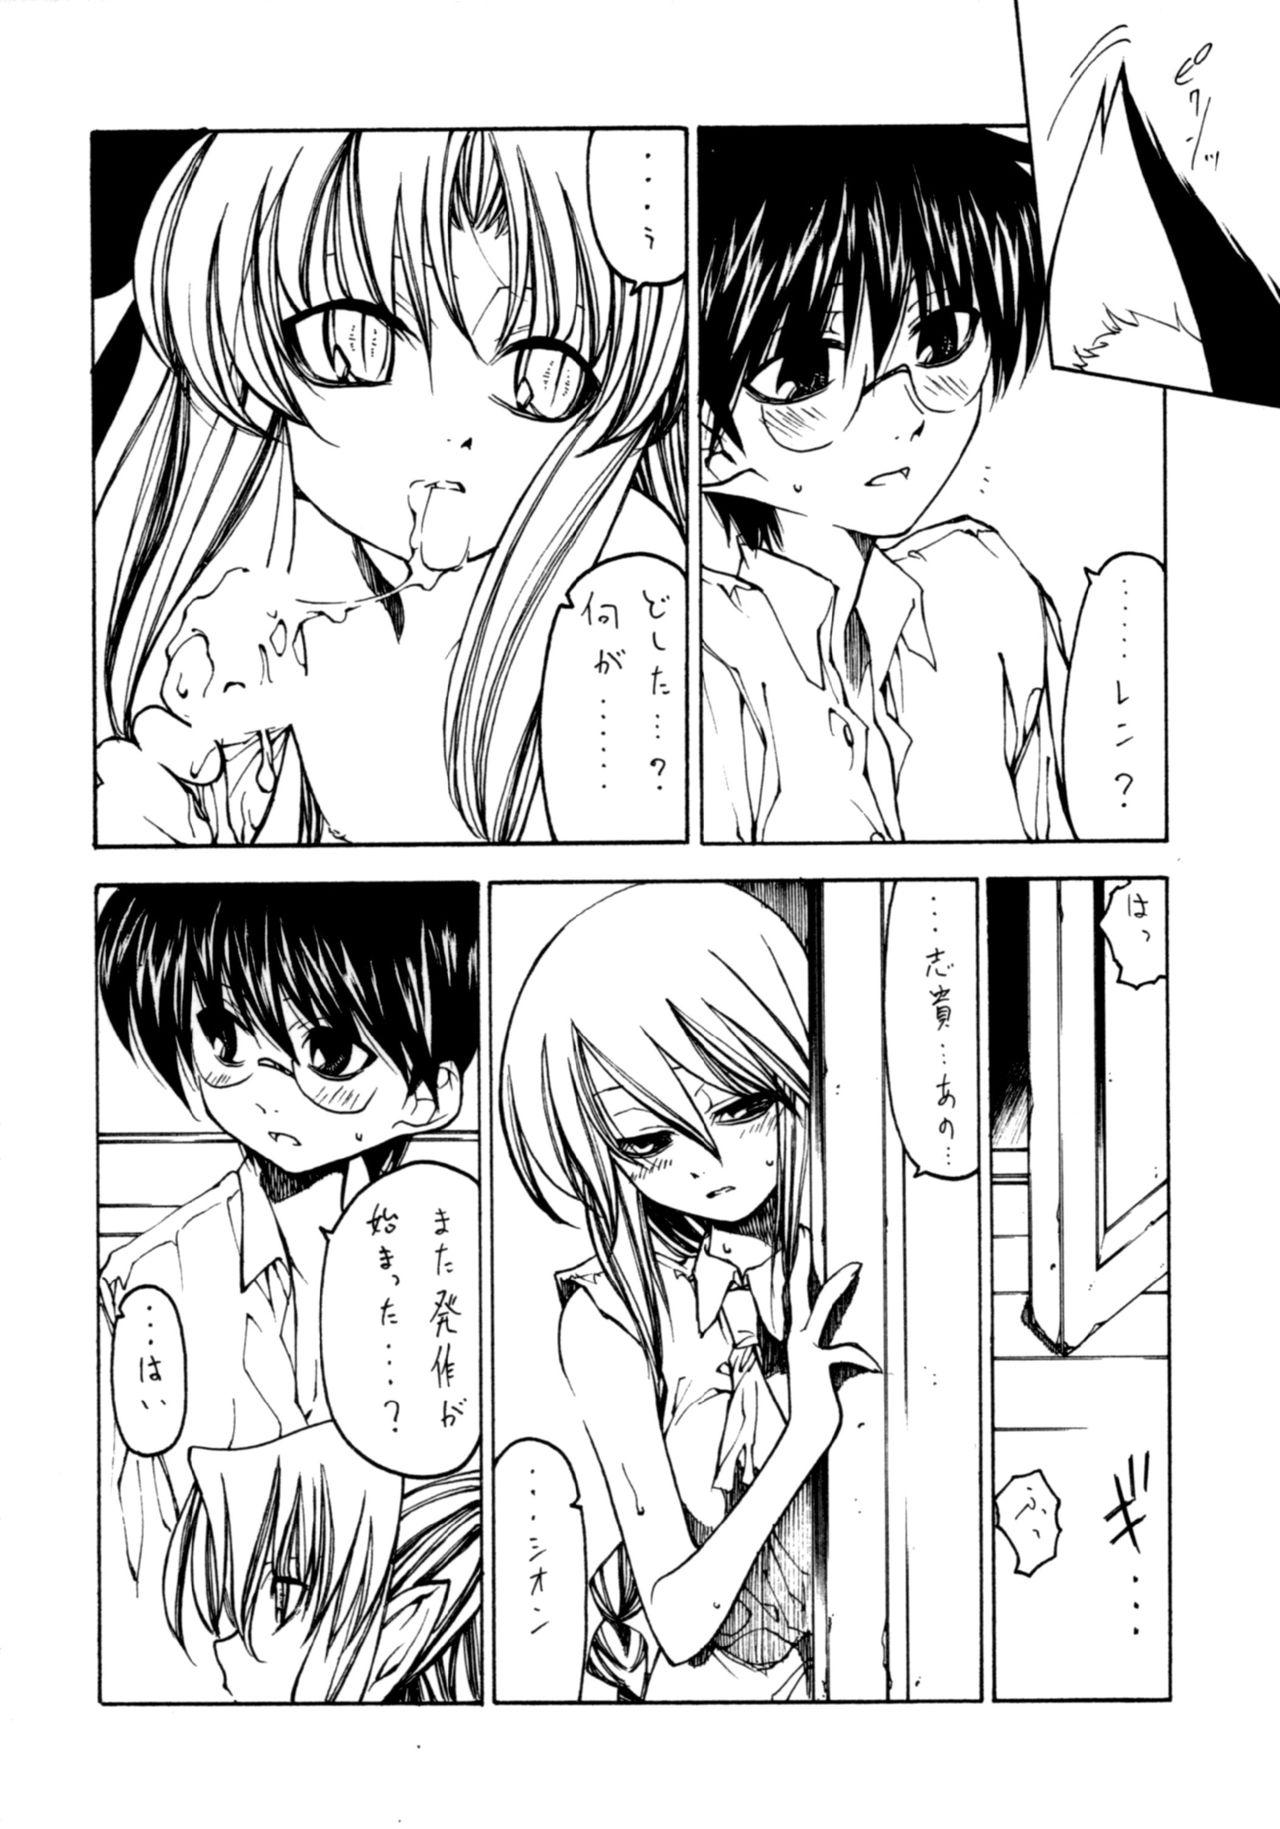 Nut Yoasobi - Tsukihime Kissing - Page 5